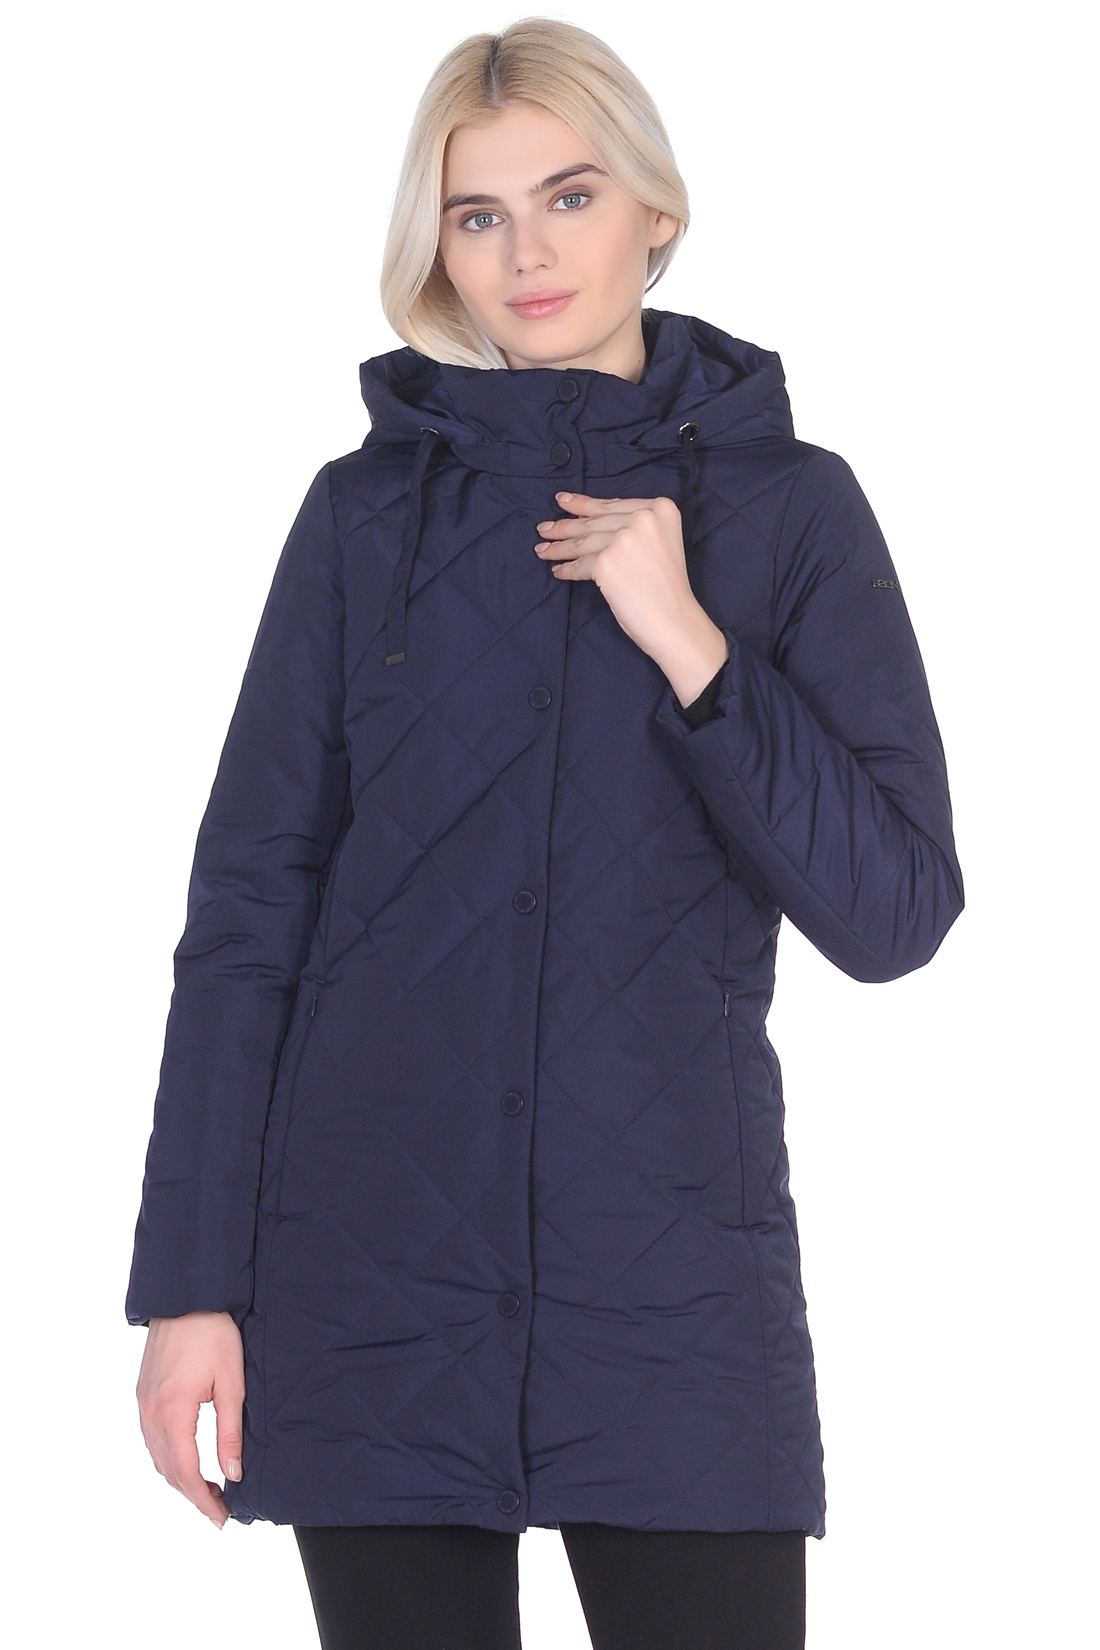 Удлинённая стёганая куртка с капюшоном (арт. baon B039022), размер L, цвет синий Удлинённая стёганая куртка с капюшоном (арт. baon B039022) - фото 1